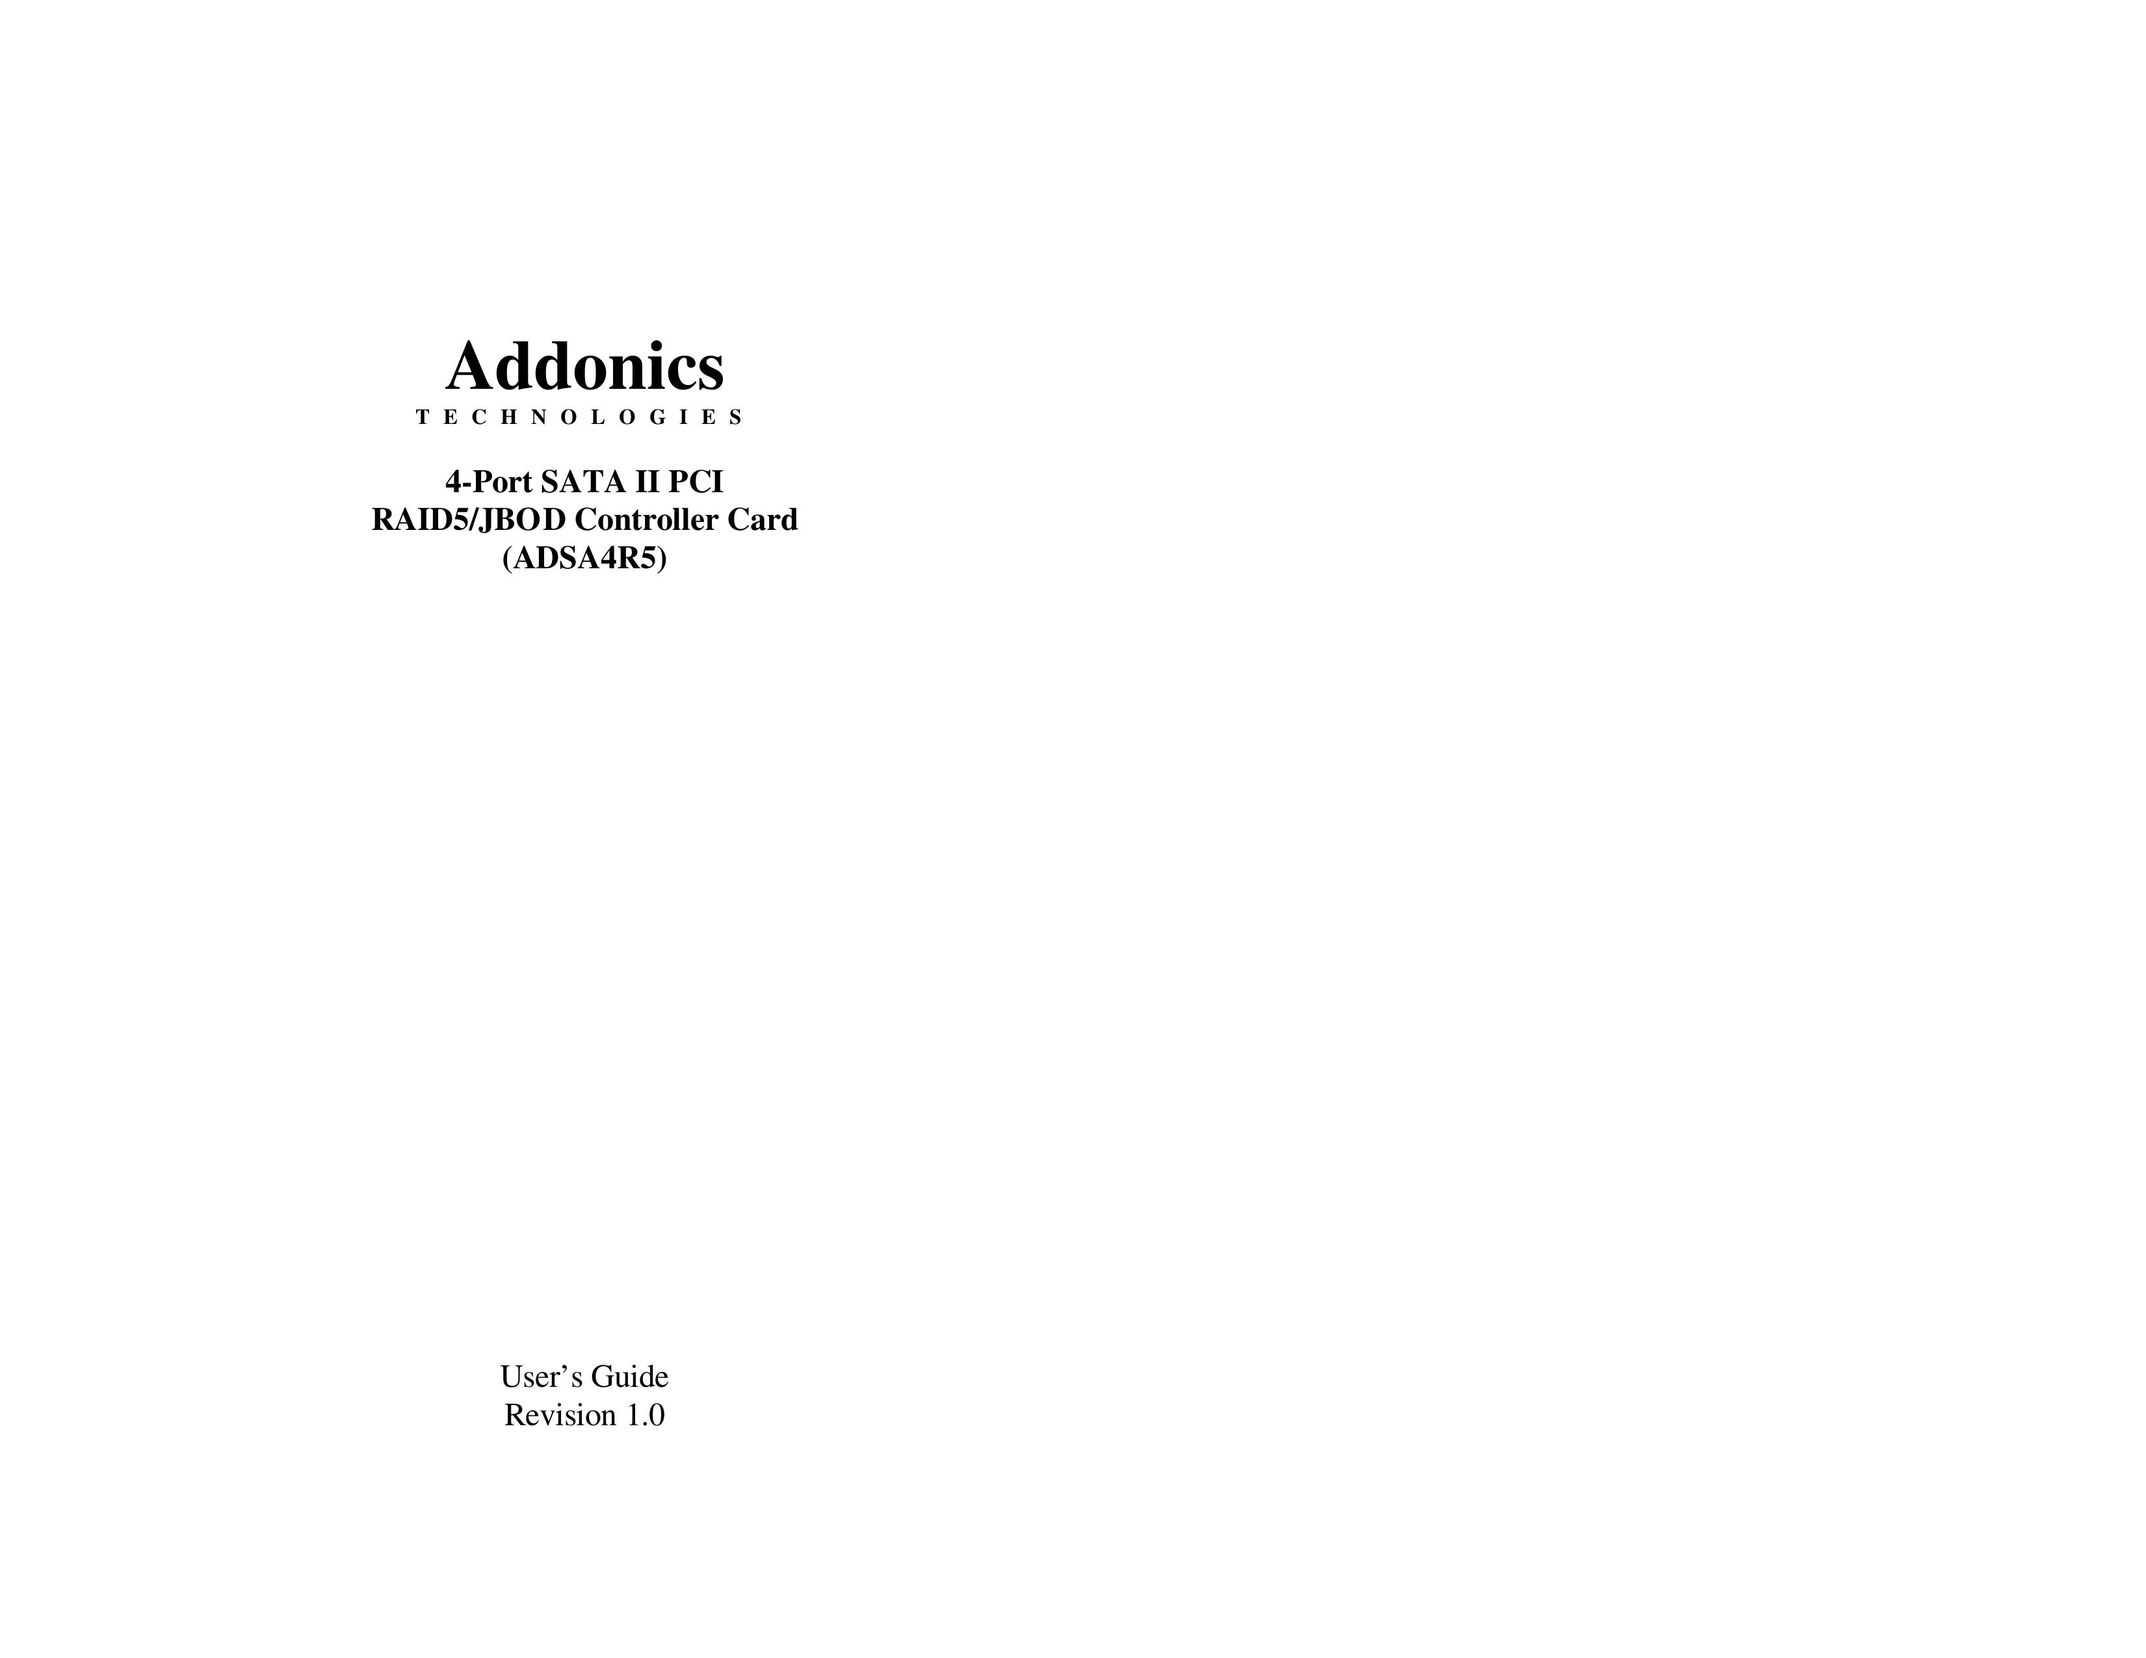 Addonics Technologies ADSA4R5 Computer Hardware User Manual